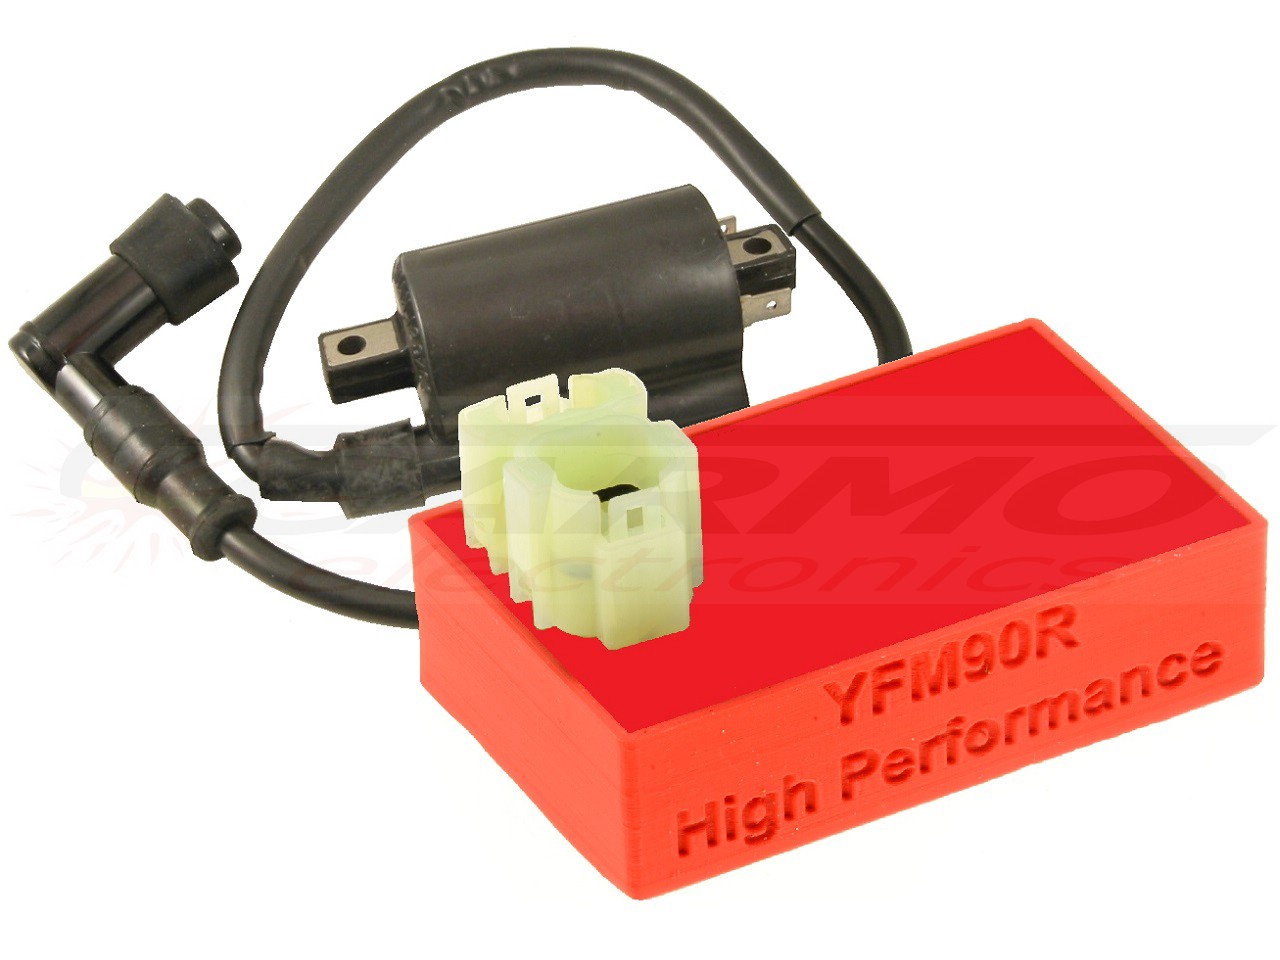 Improved Yamaha YFM90R YFM90 Raptor CDI TC box brain more power no rev limiter 2013-2023 - Click Image to Close